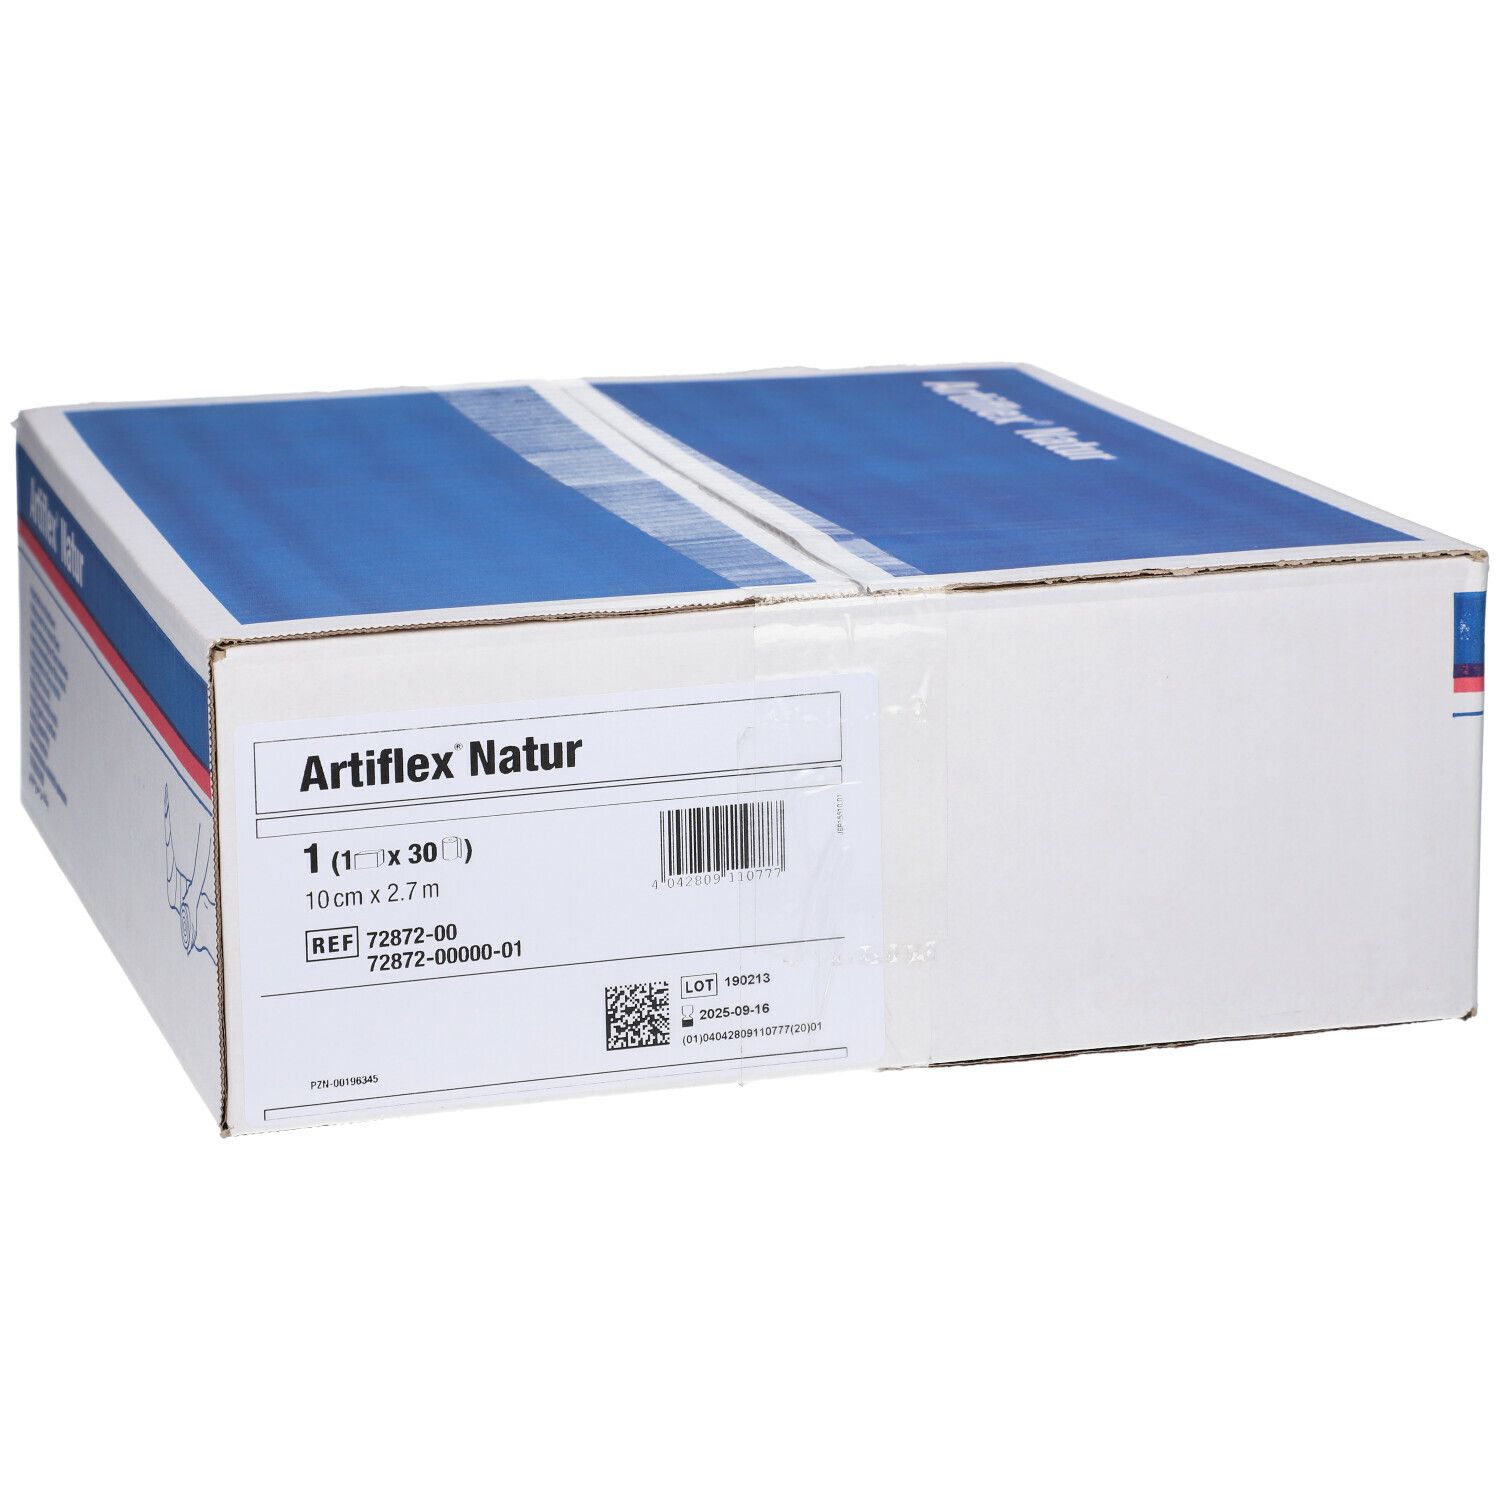 Artiflex® Natur Polsterbinde 10 cm x 2,7 m